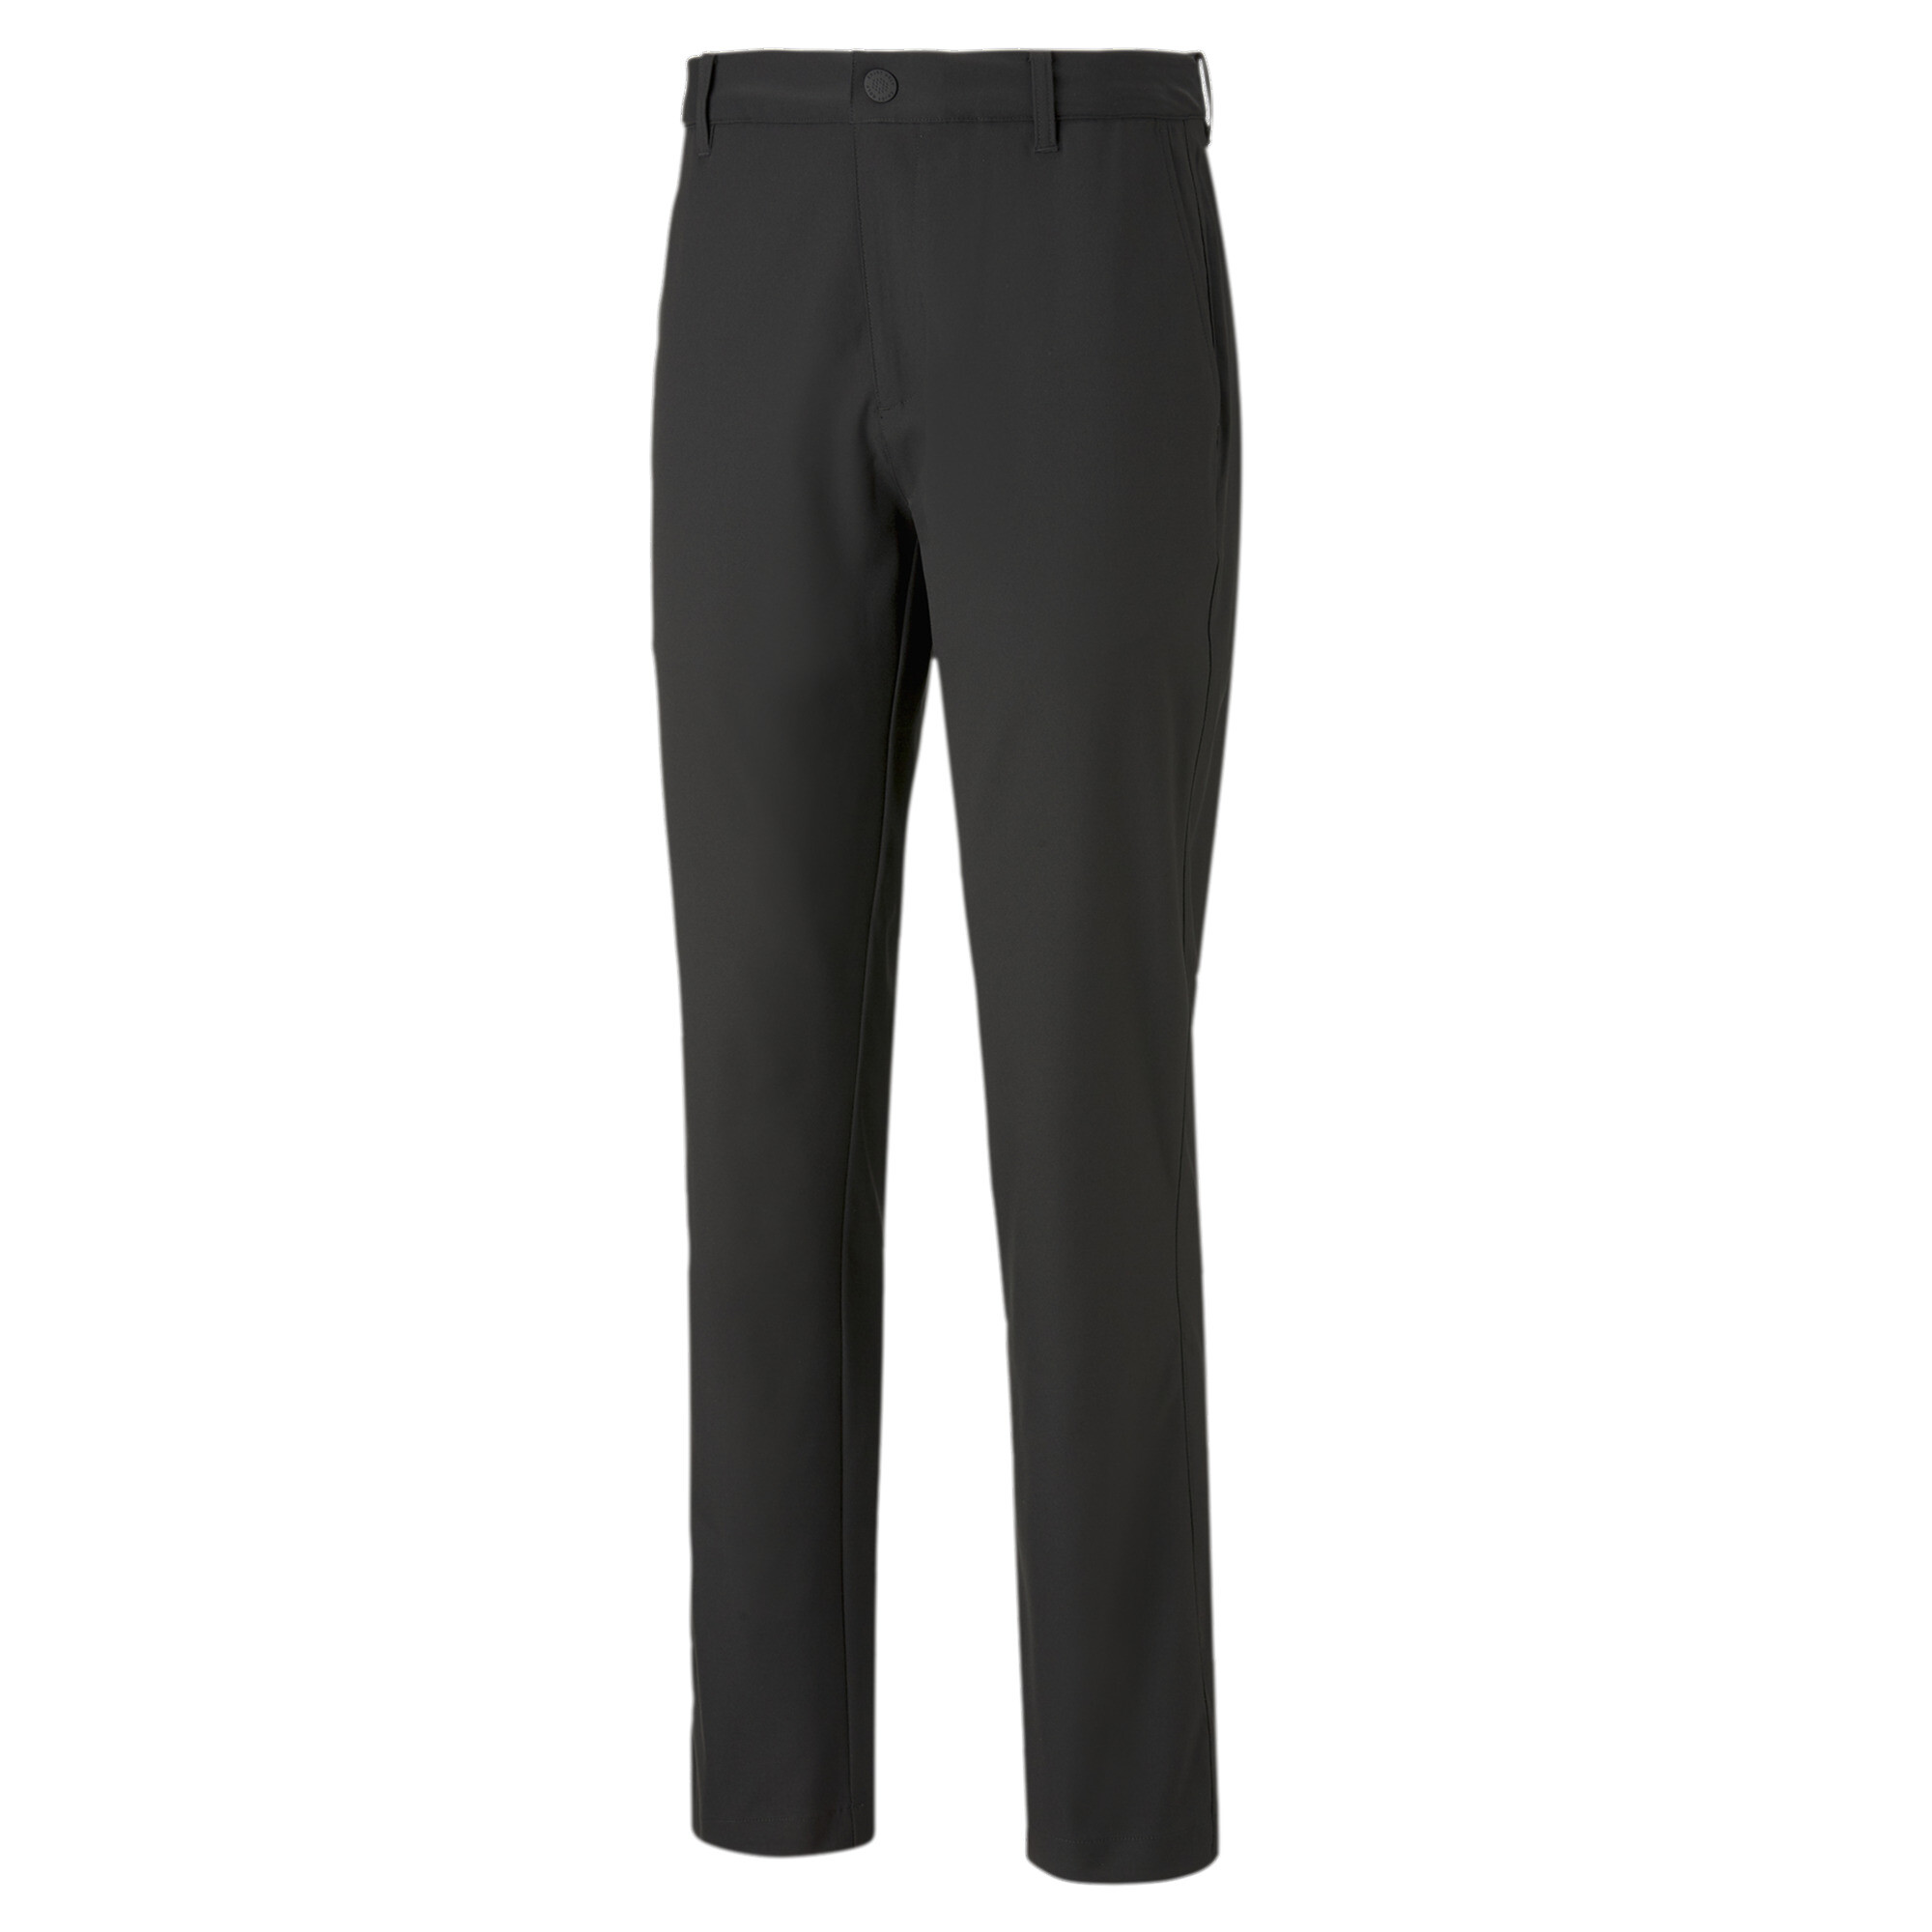 Men's Puma Dealer Golf Pants, Black, Size 34/30, Clothing